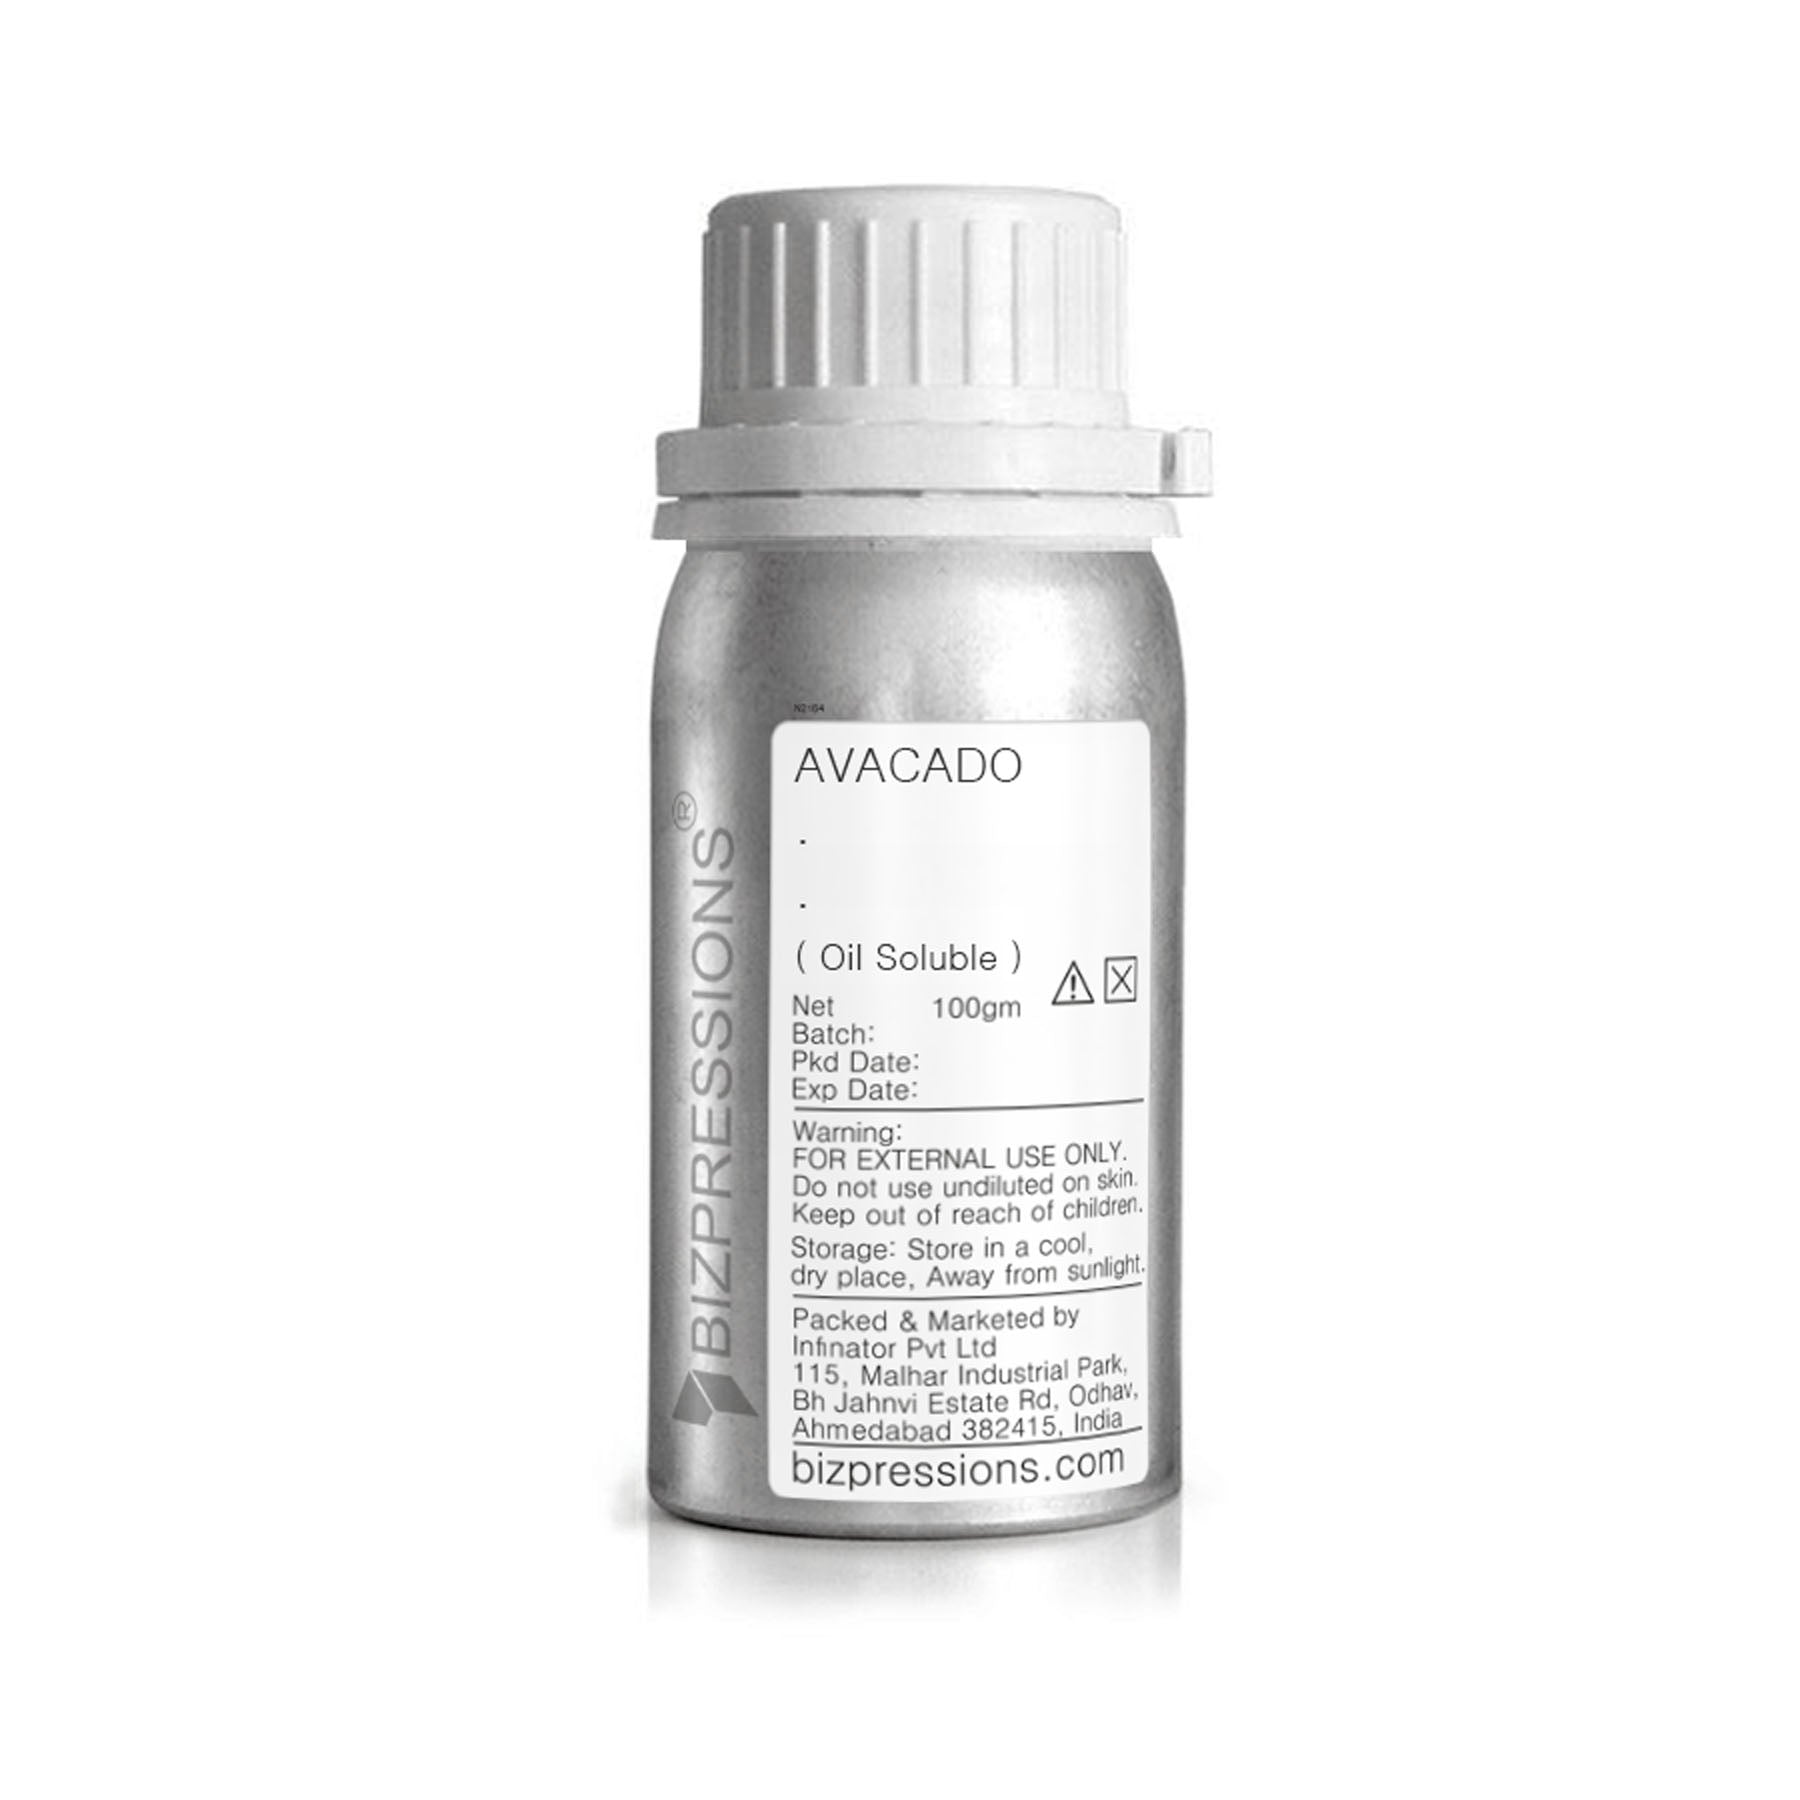 AVACADO - Fragrance ( Oil Soluble ) - 100 gm